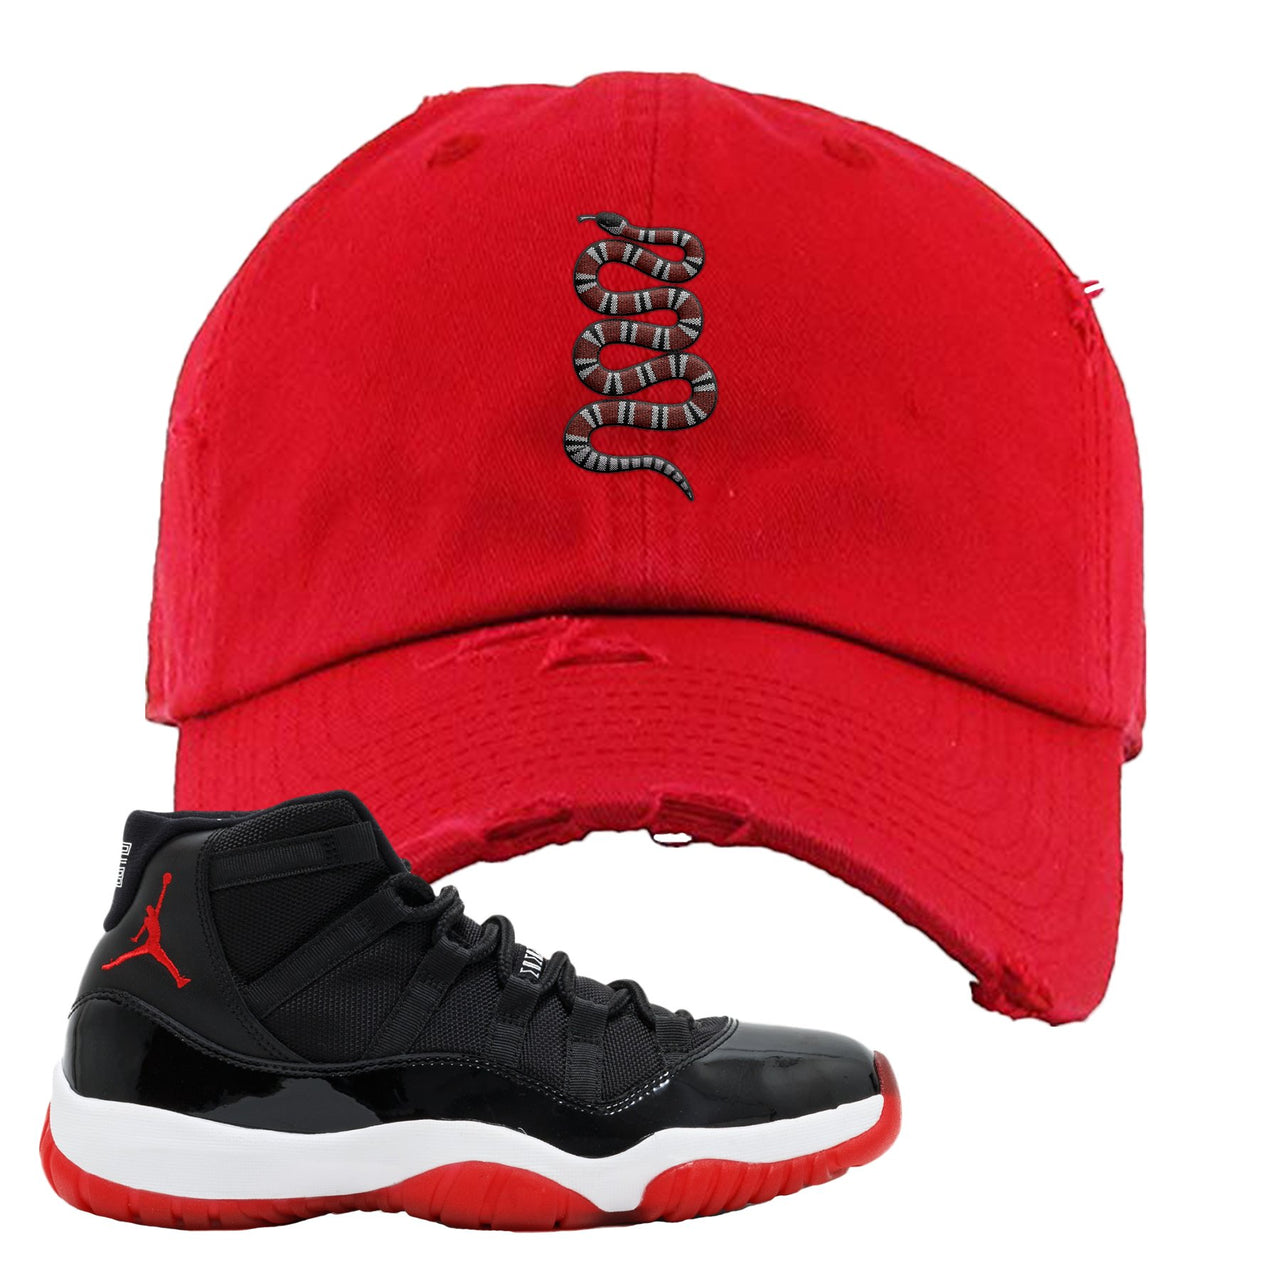 Jordan 11 Bred Coiled Snake Red Sneaker Hook Up Distressed Dad Hat